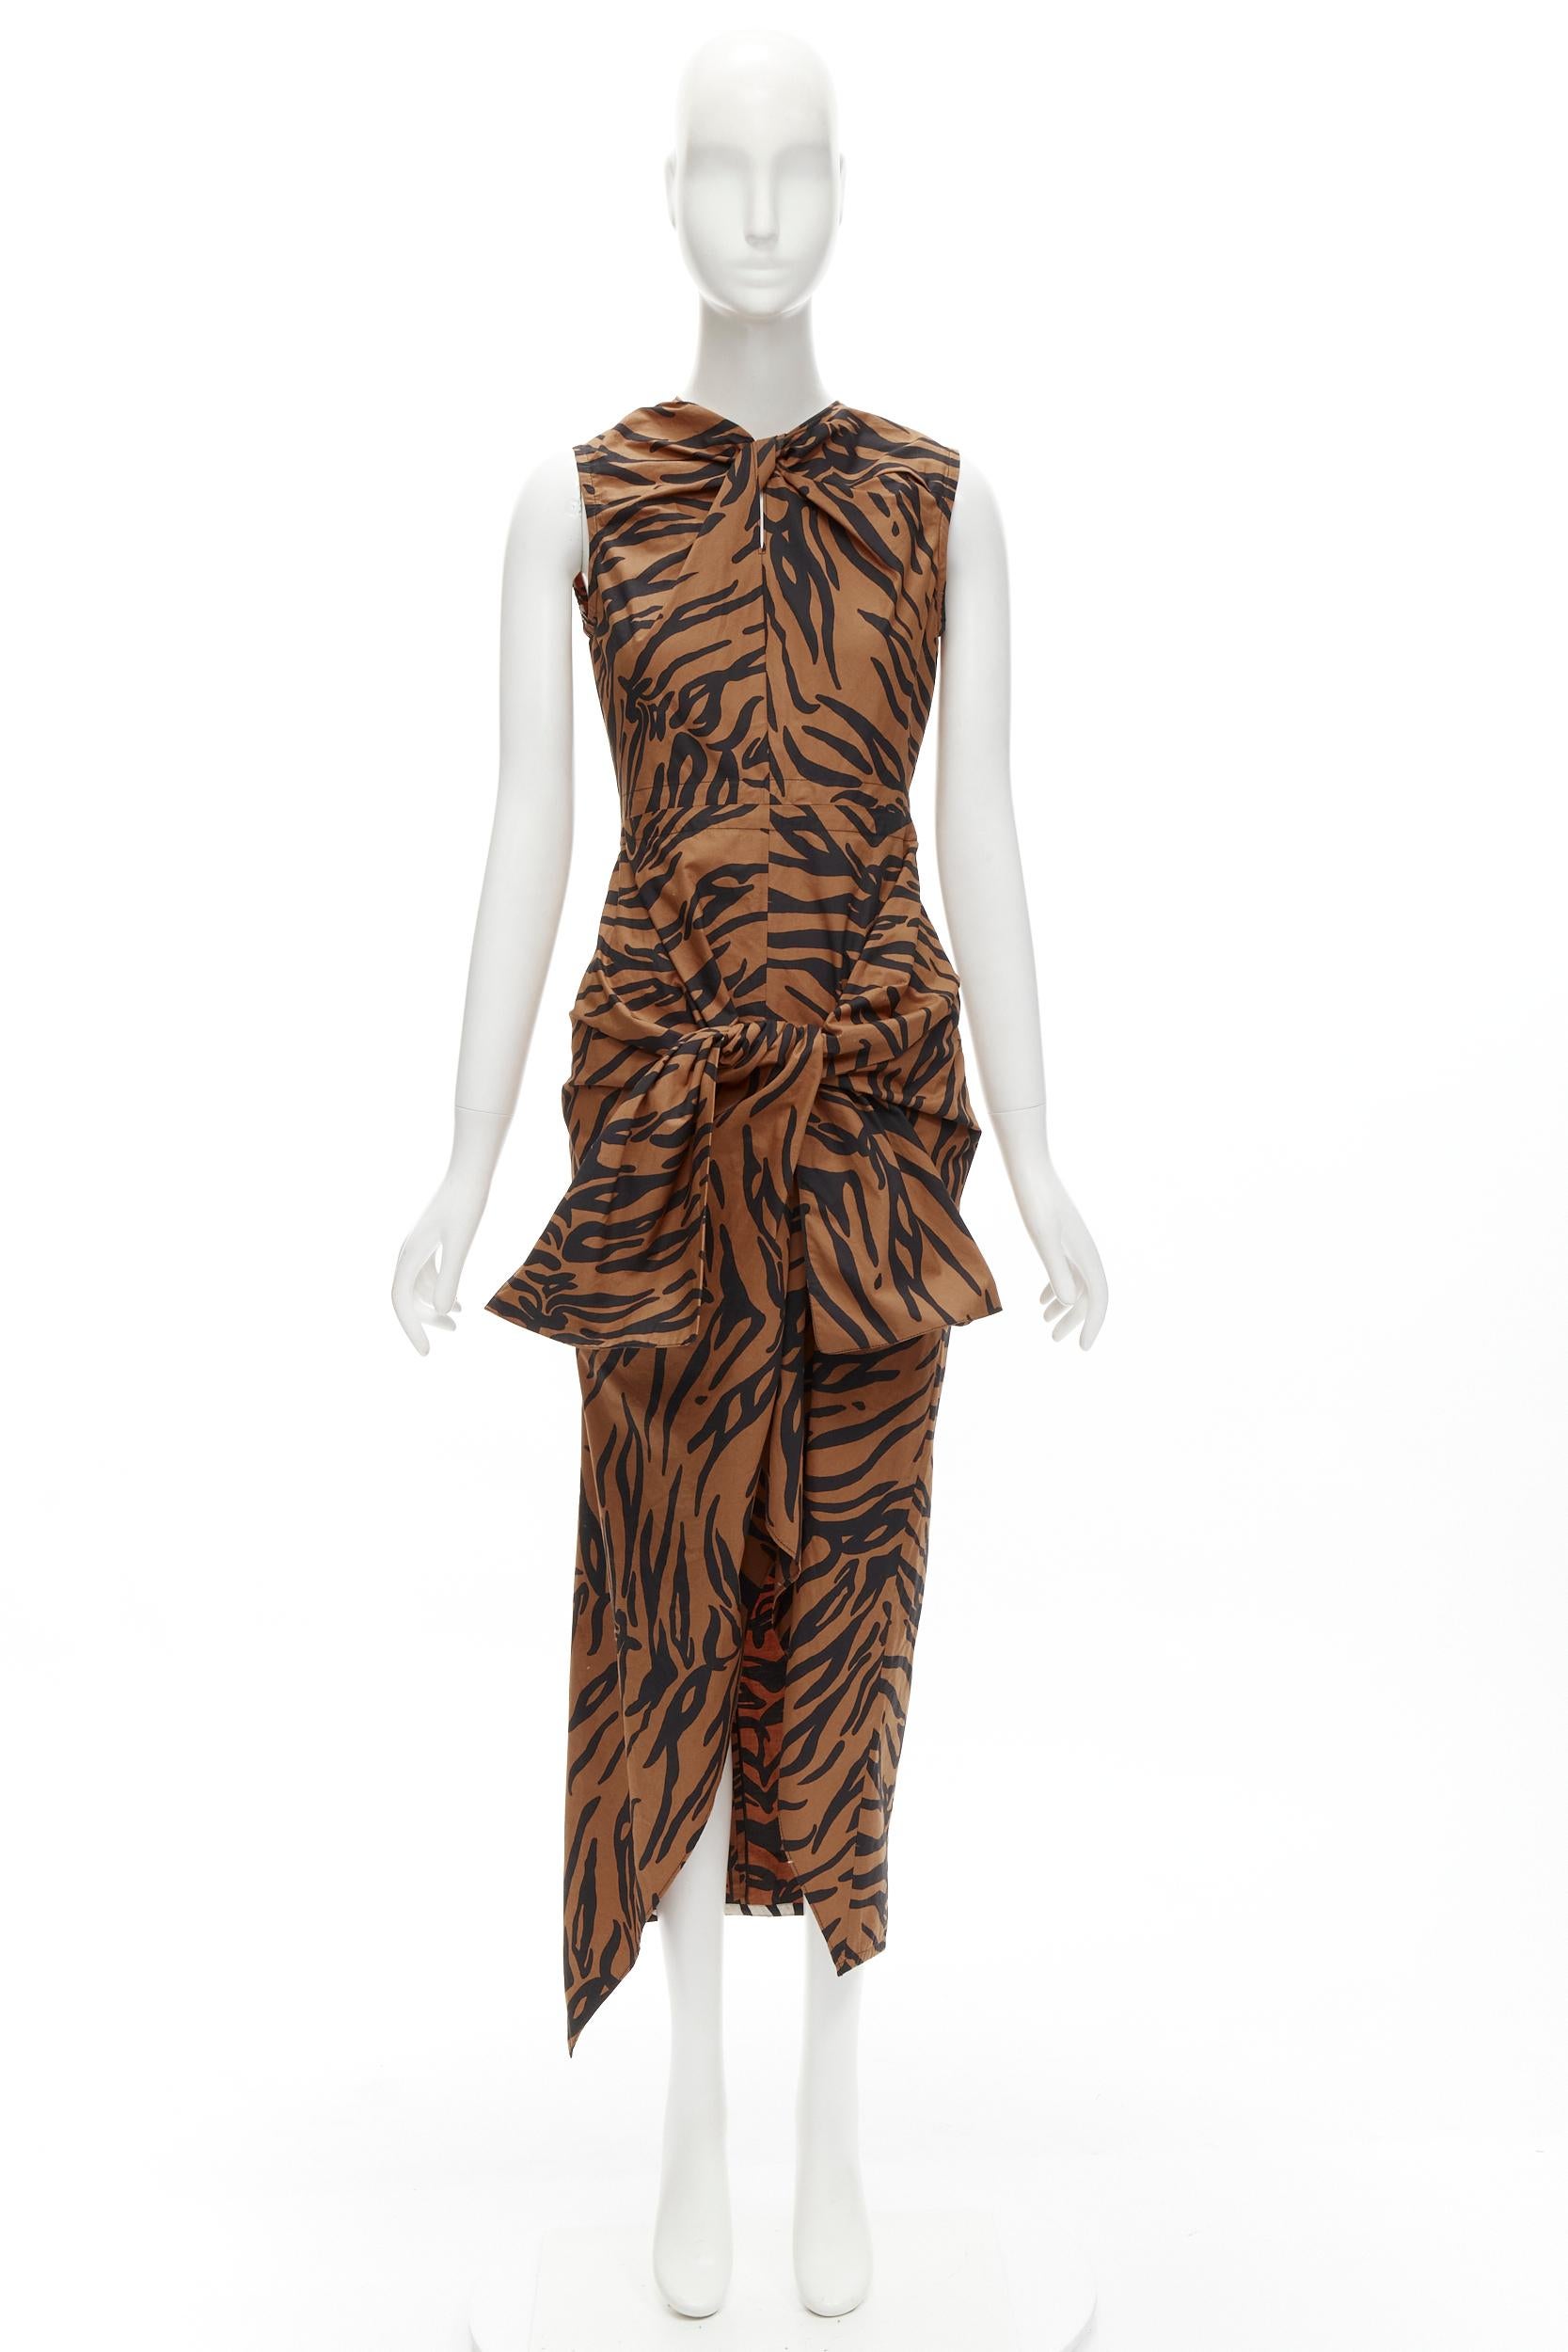 rare OLD CELINE Phoebe Philo 2016 Runway brown tiger twist bow dress FR34 XS 6